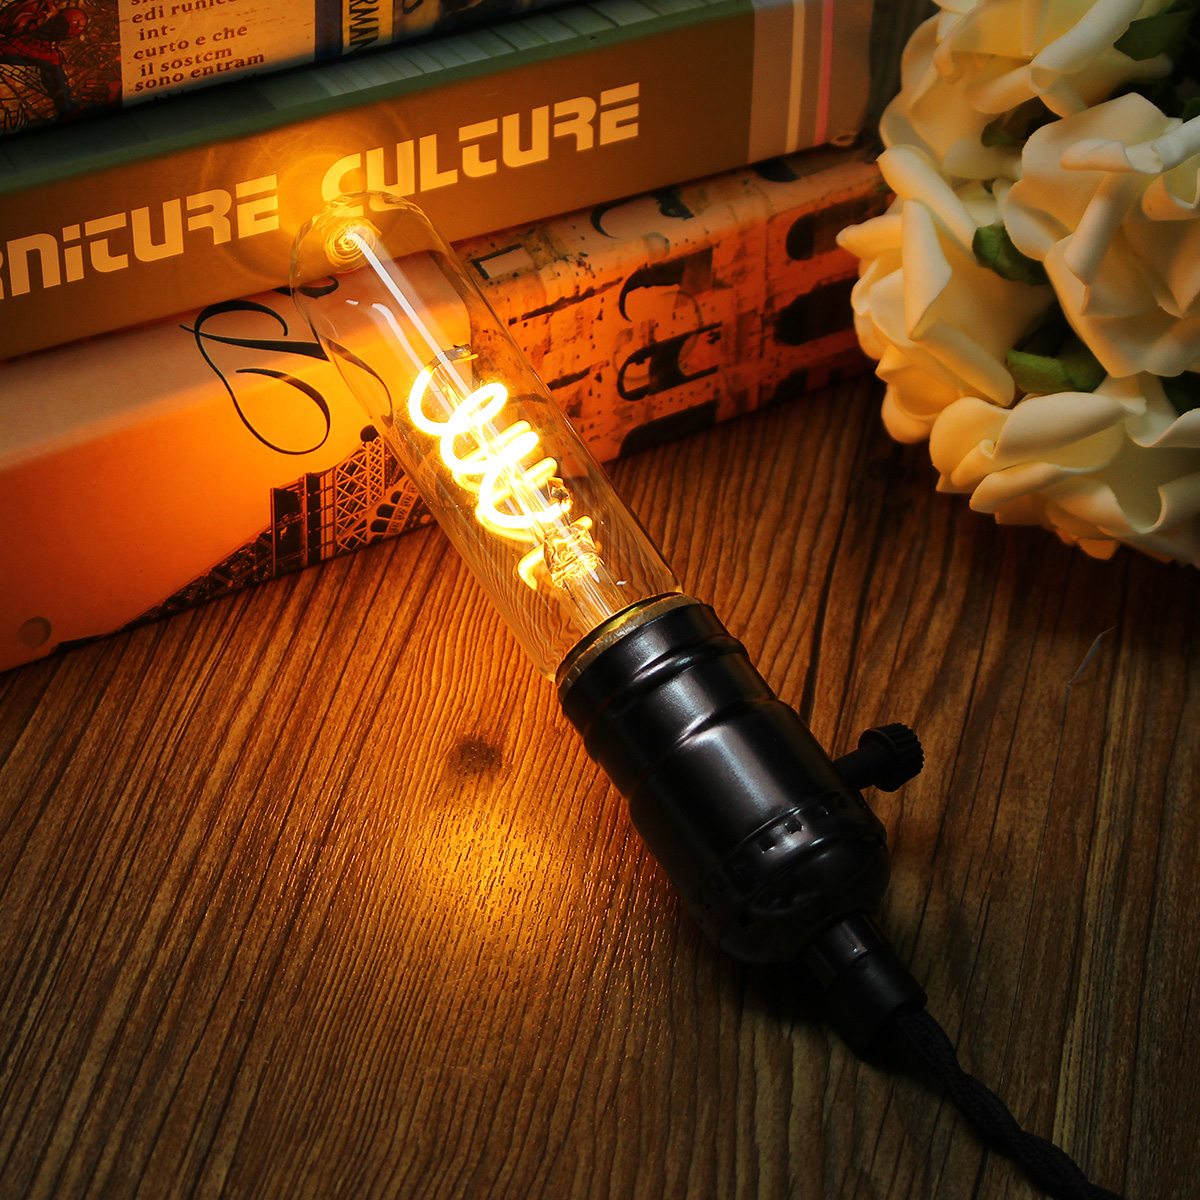 E27-Dimmable-COB-LED-Vintage-Retro-Industrial-Edison-Lamp-Indoor-Lighting-Filament-Light-Bulb-AC220V-1115999-2